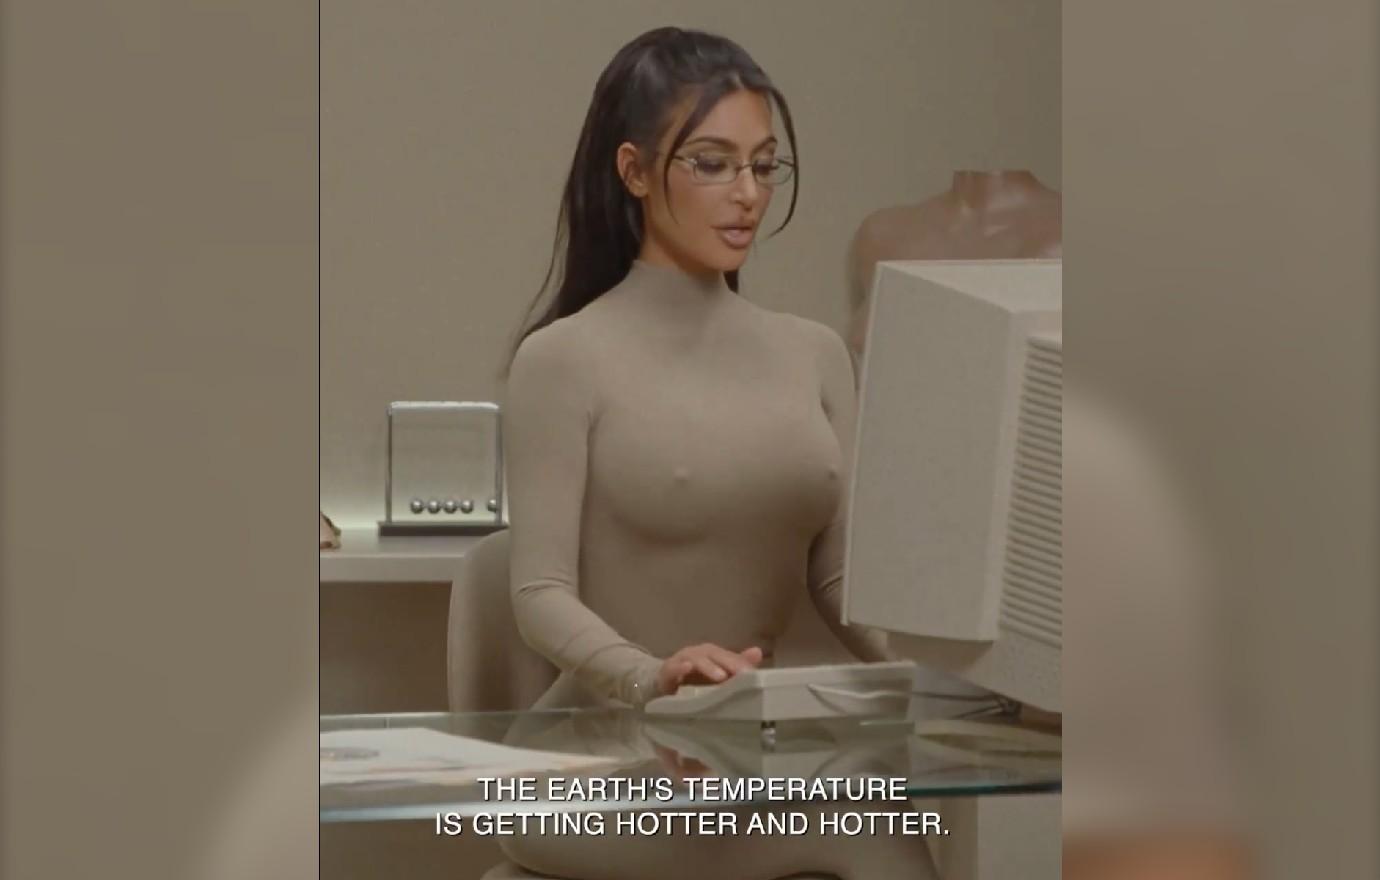 Kim Kardashian's Skims Nipple Bra Has Critics, But Breast Cancer